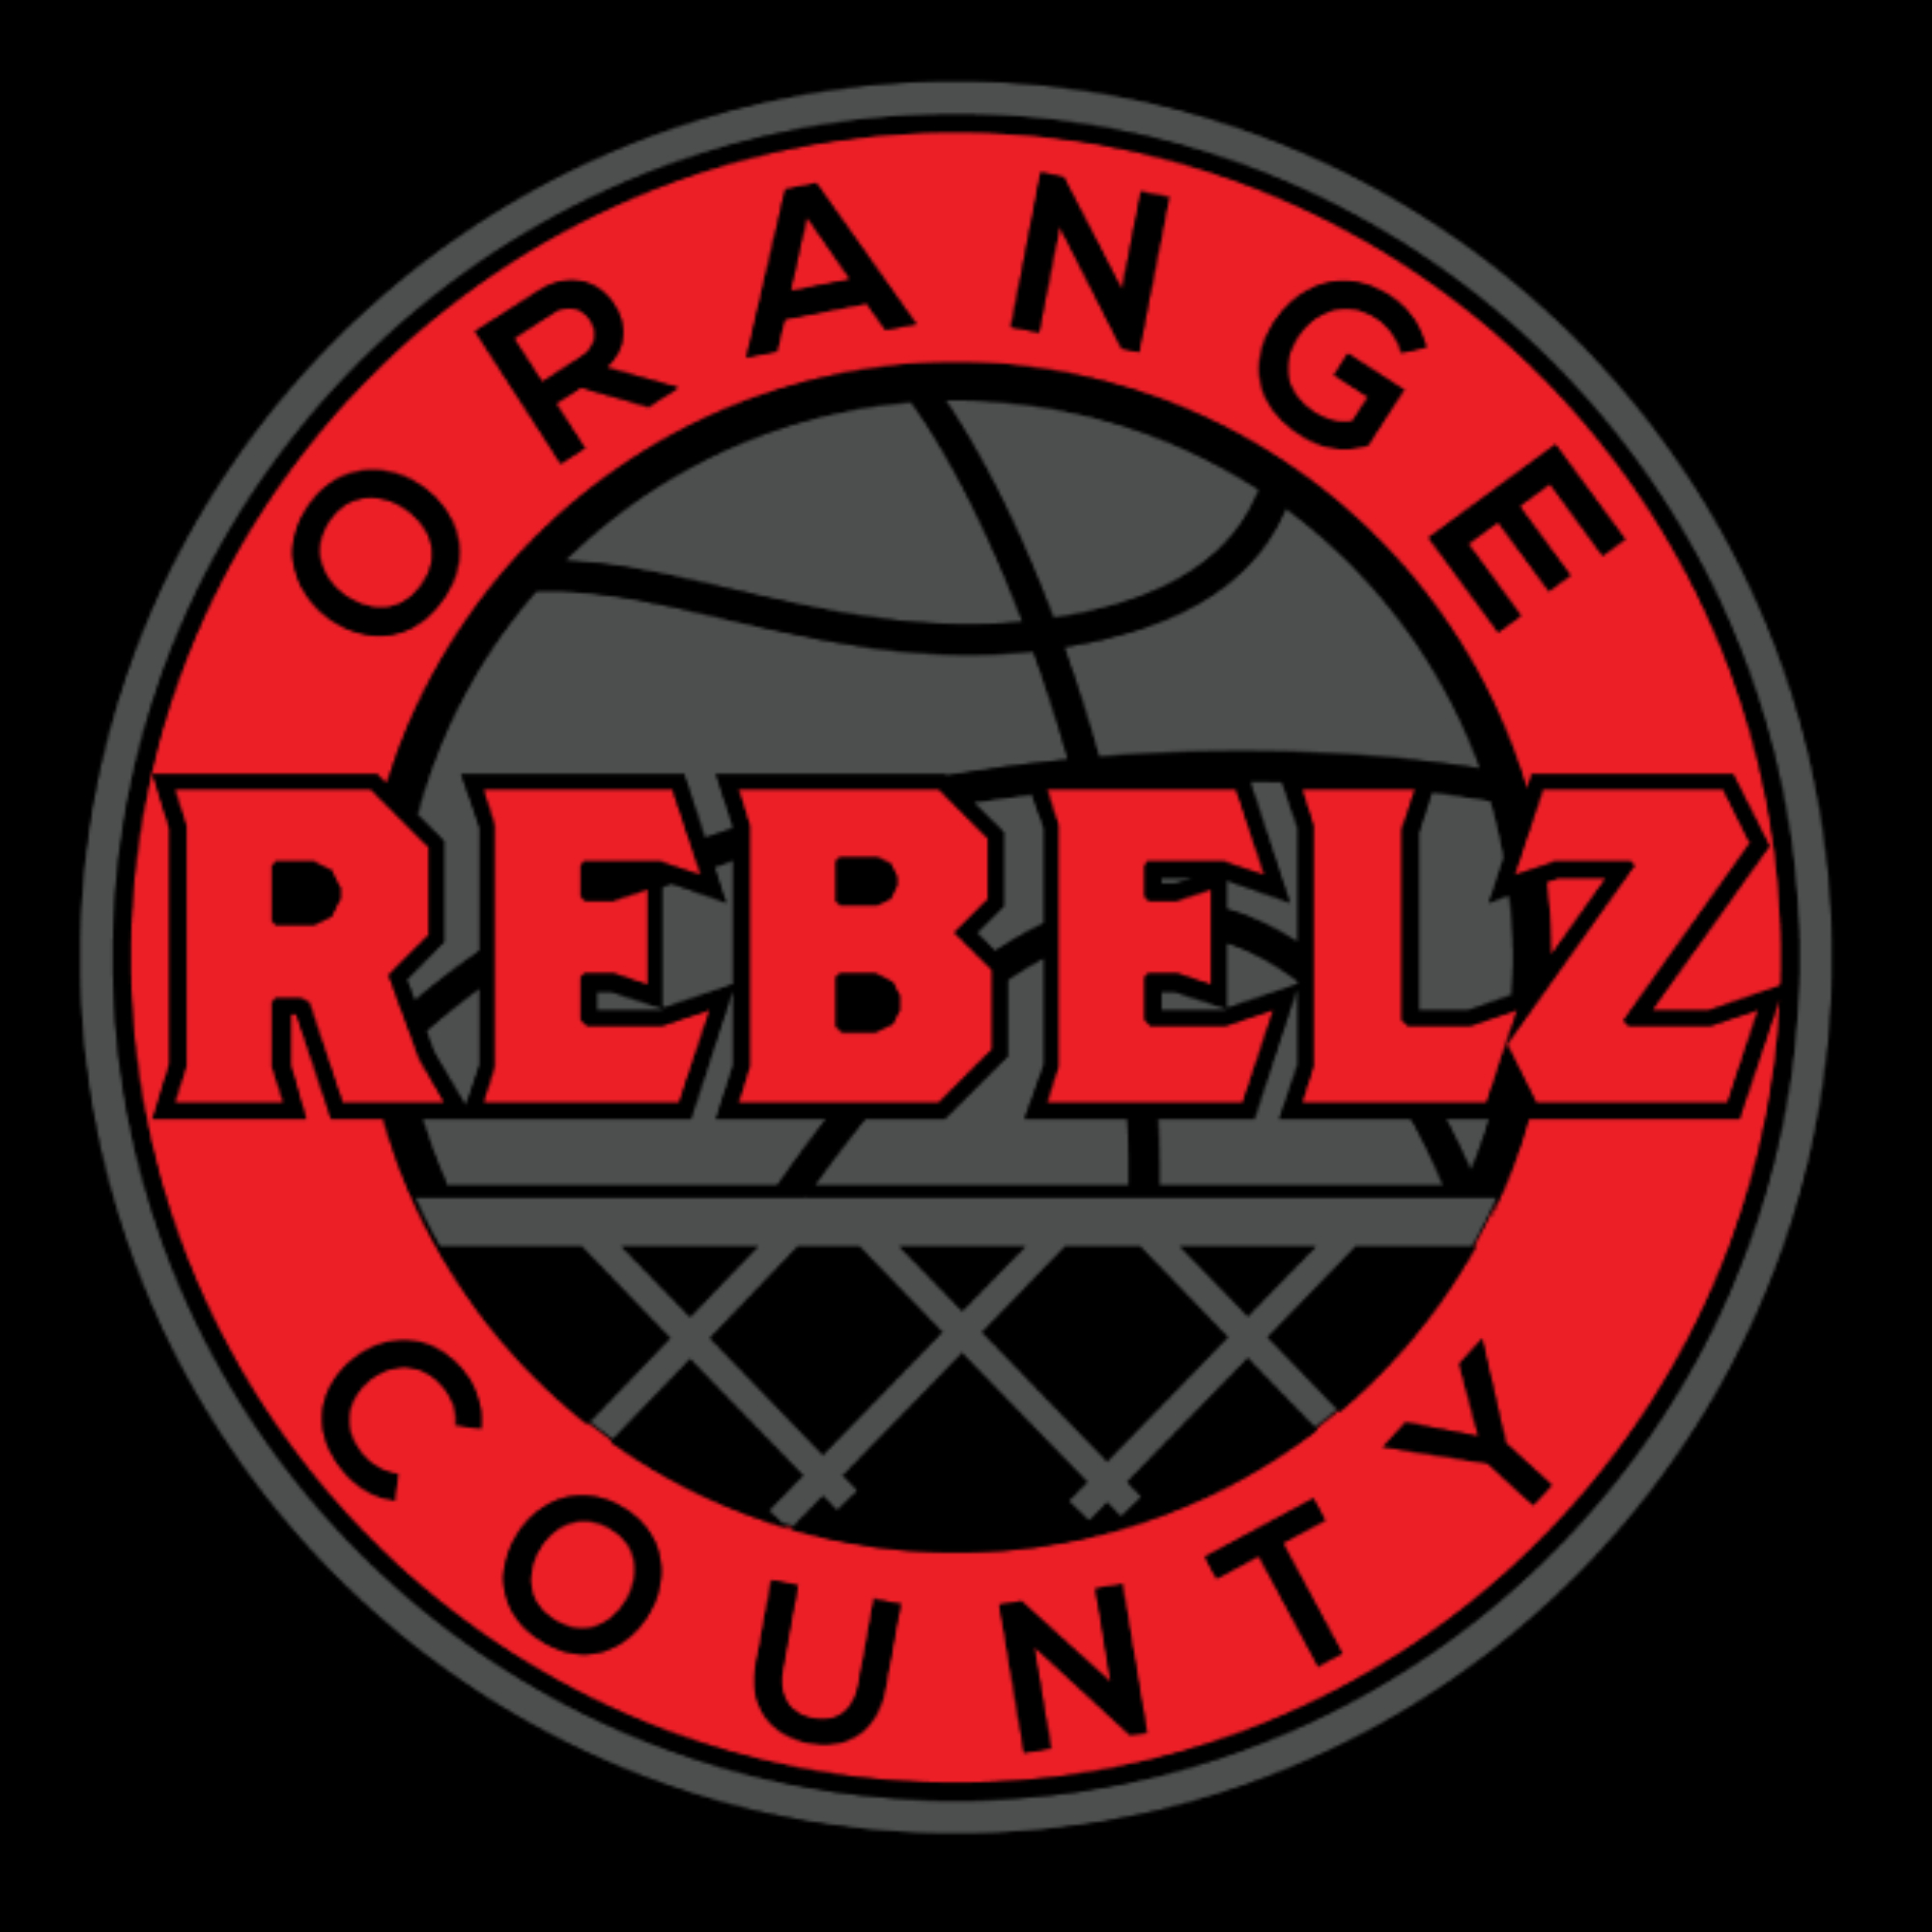 The official logo of OC Rebelz